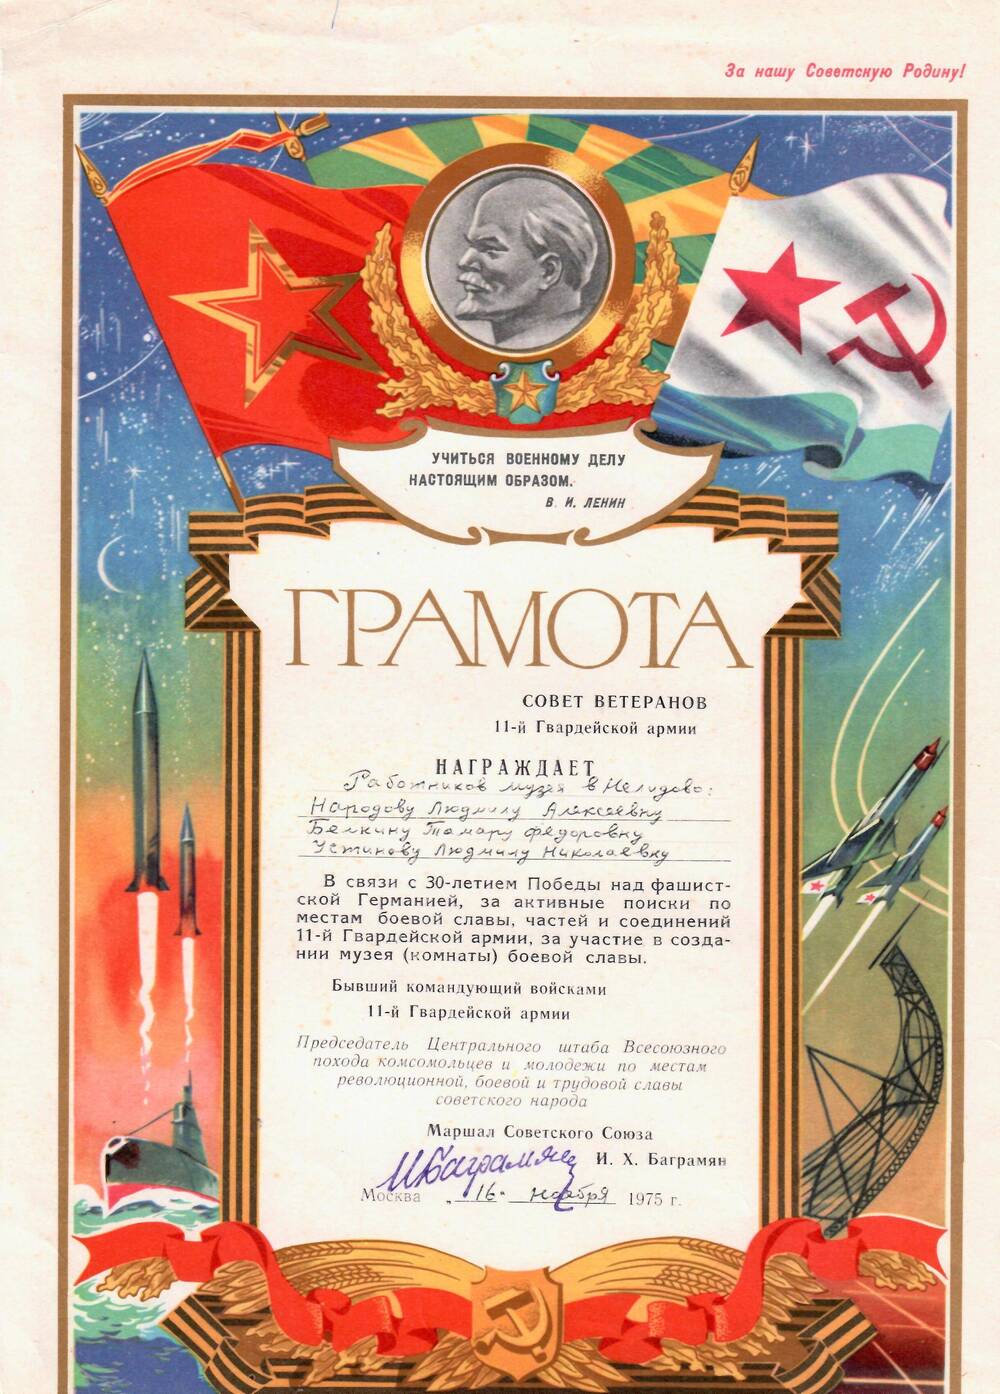 Грамота вручена сотрудникам музея в Нелидово в связи с 30-летием Победы, 1975 г.